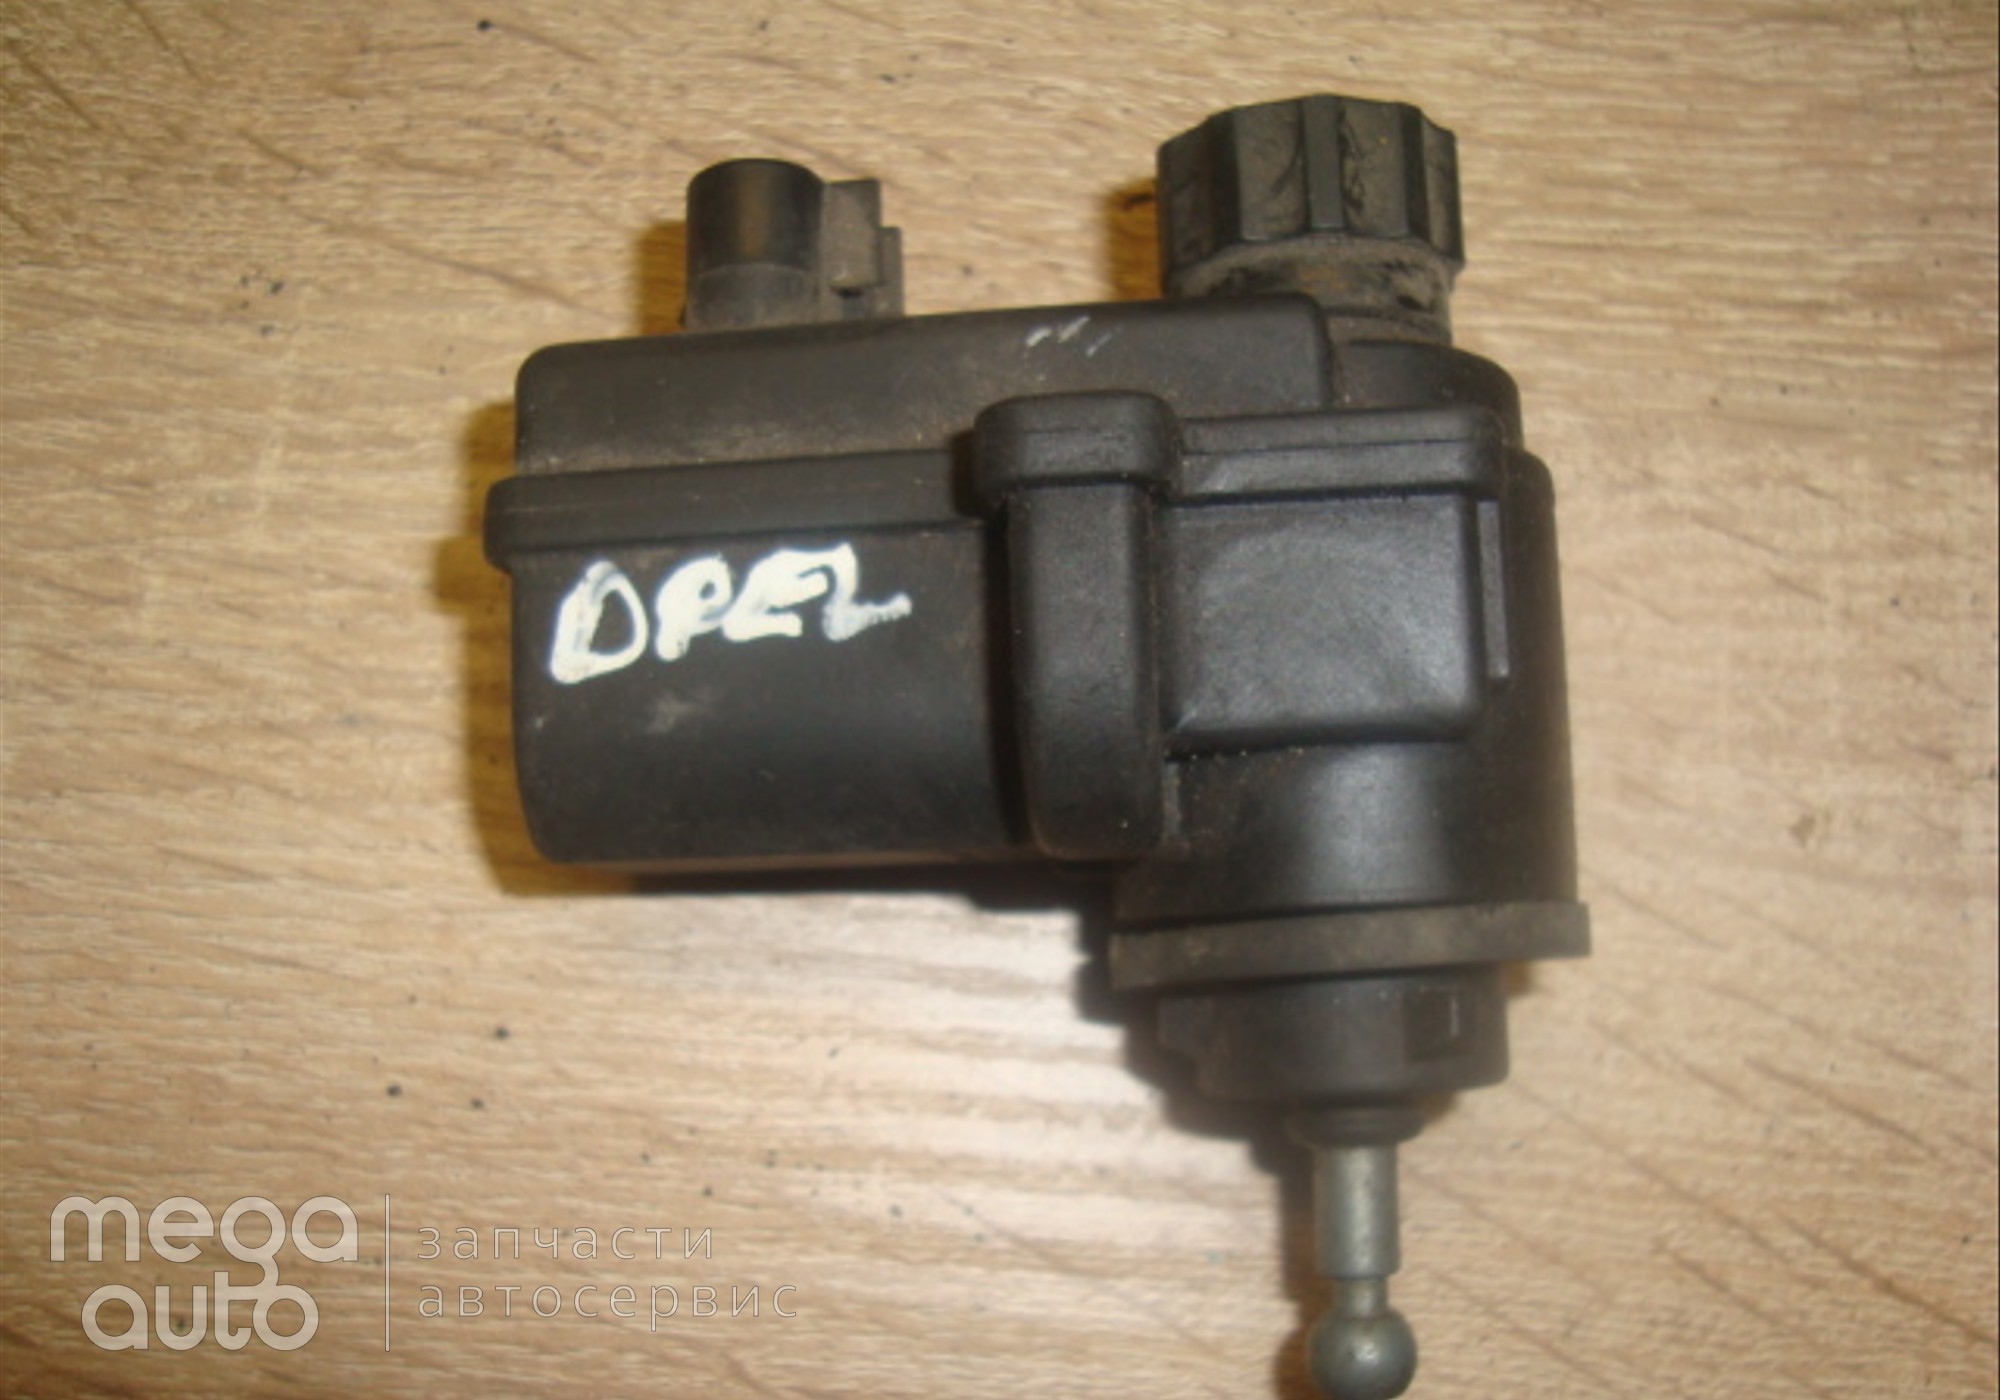 90413185 Моторчик корректора фары опель для Opel Astra F (с 1991 по 2004)